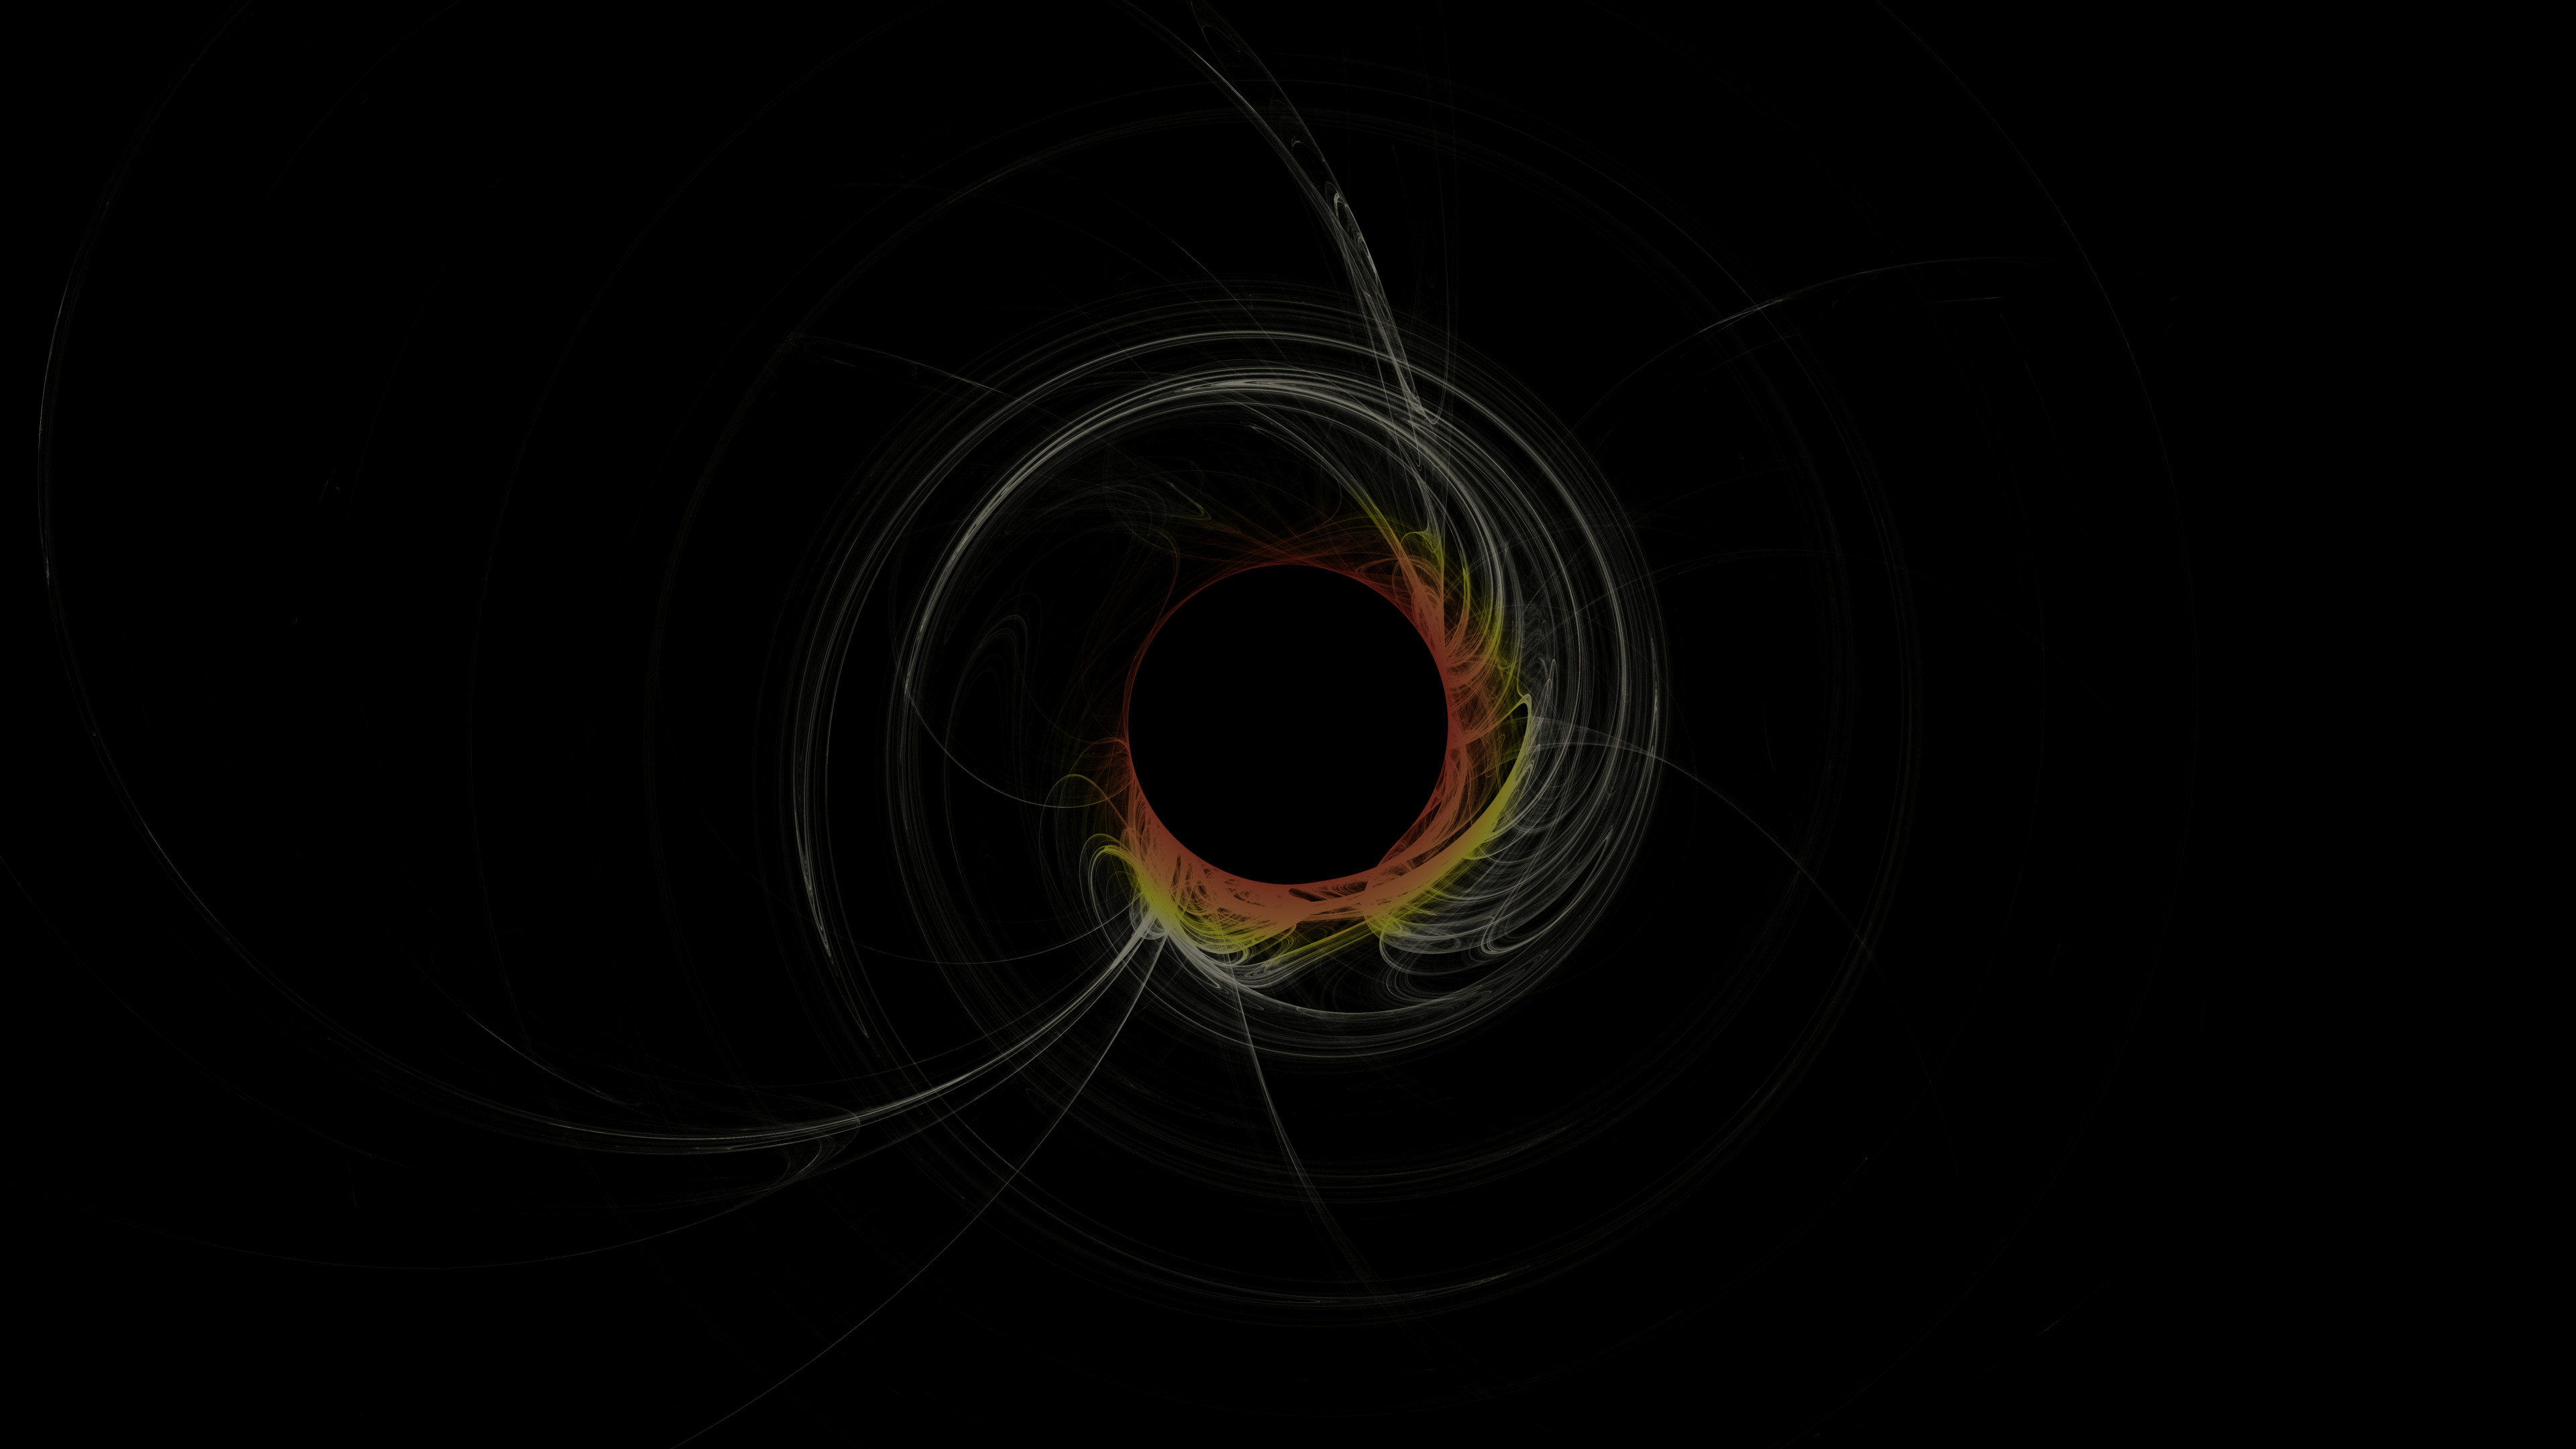 Wallpaper Event Horizon Of The Singularity By Hsoj95